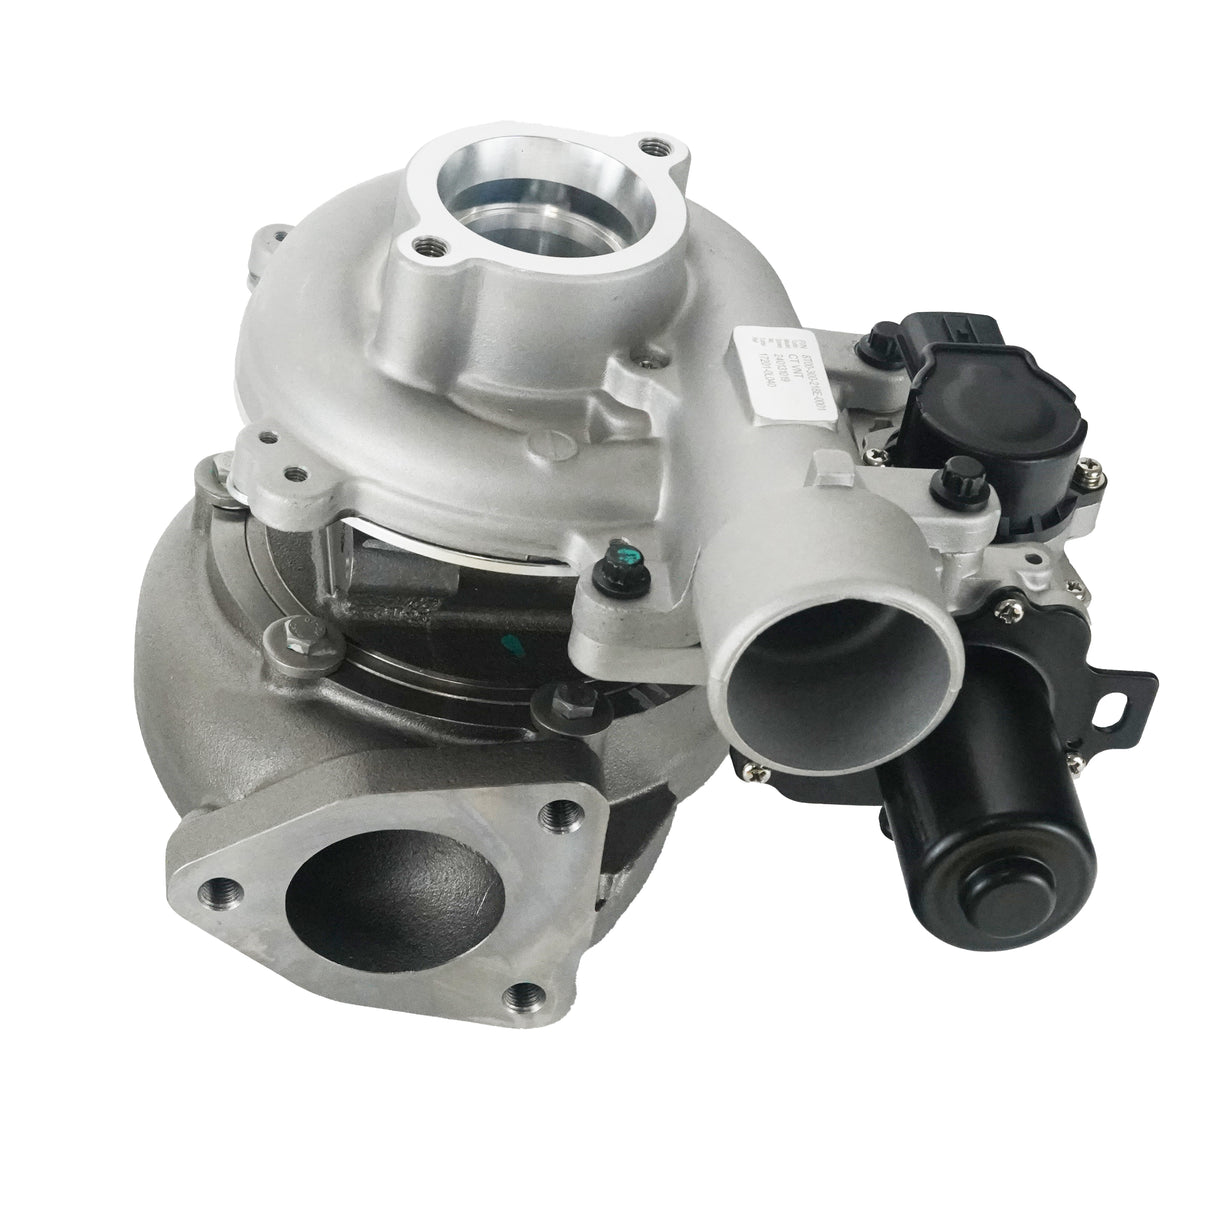 𝐒𝐓𝐀𝐆𝐄 𝟏 CCT Upgrade Hi-Flow 30160 Turbocharger for Landcruiser Prado 3L 1KD-FTV 17201-30160